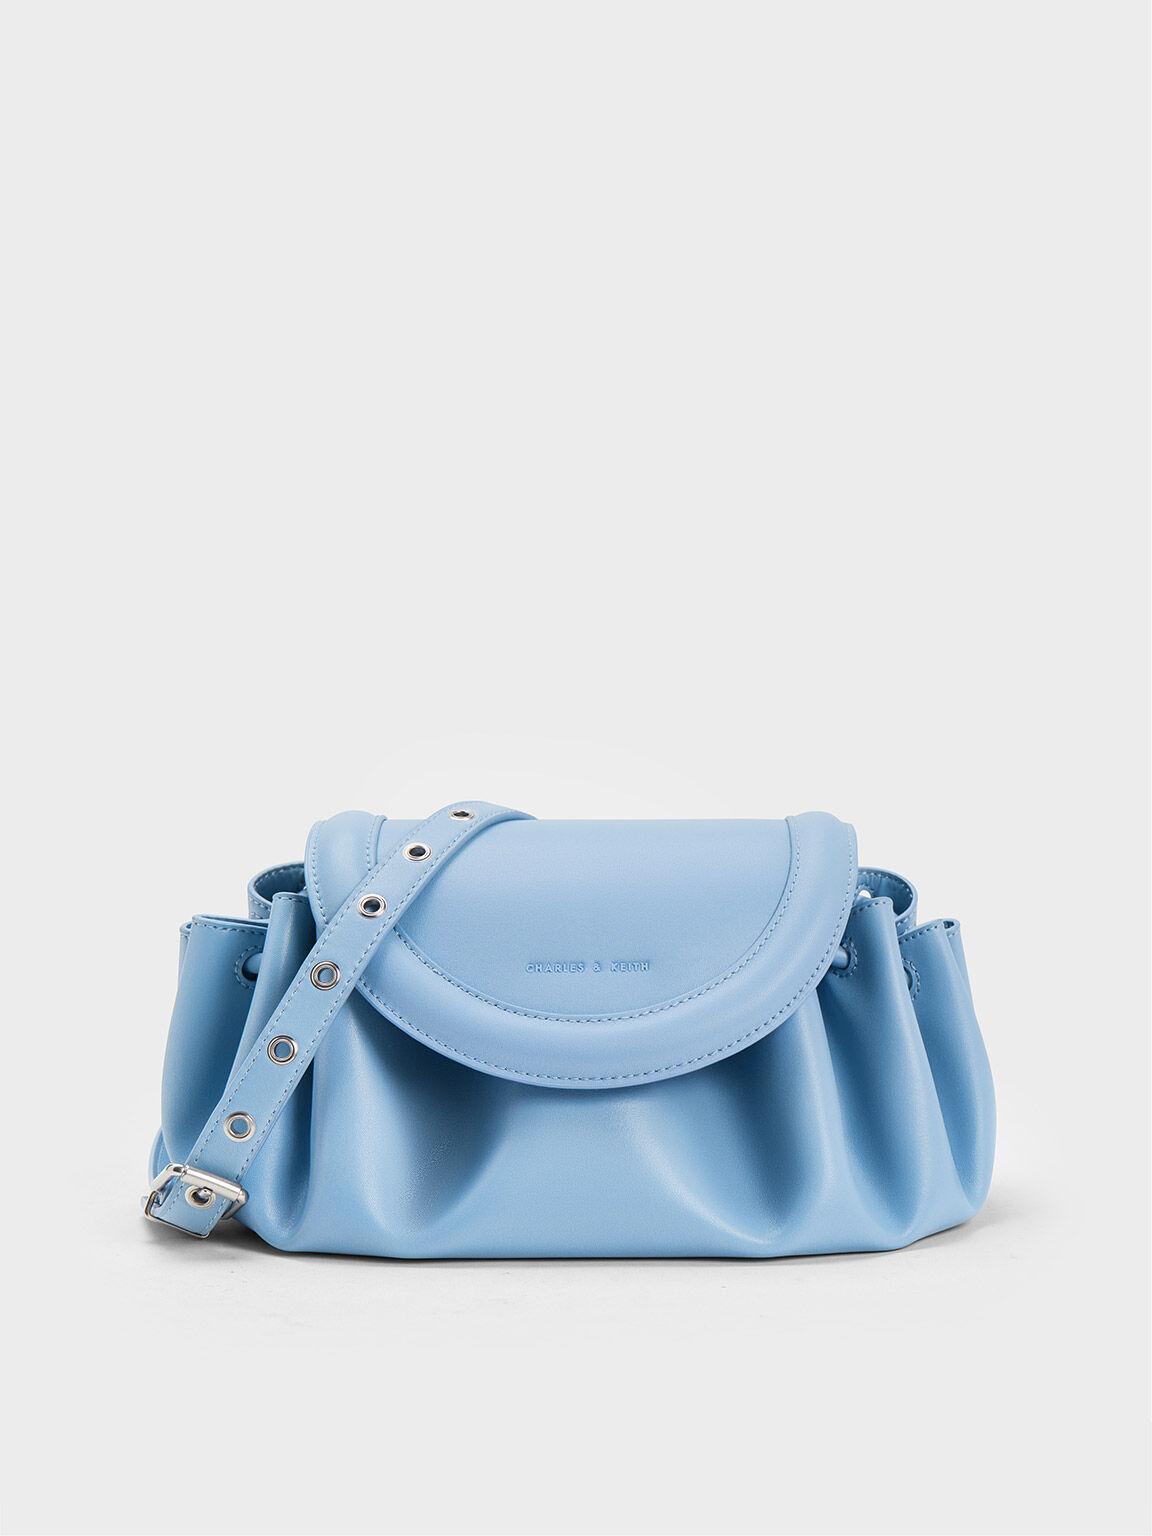 LMKIDS Women’s Fashion Crossbody Bags Lightweight Adjustable Chain Strap Quilted Designer Handbags Shoulder Bag